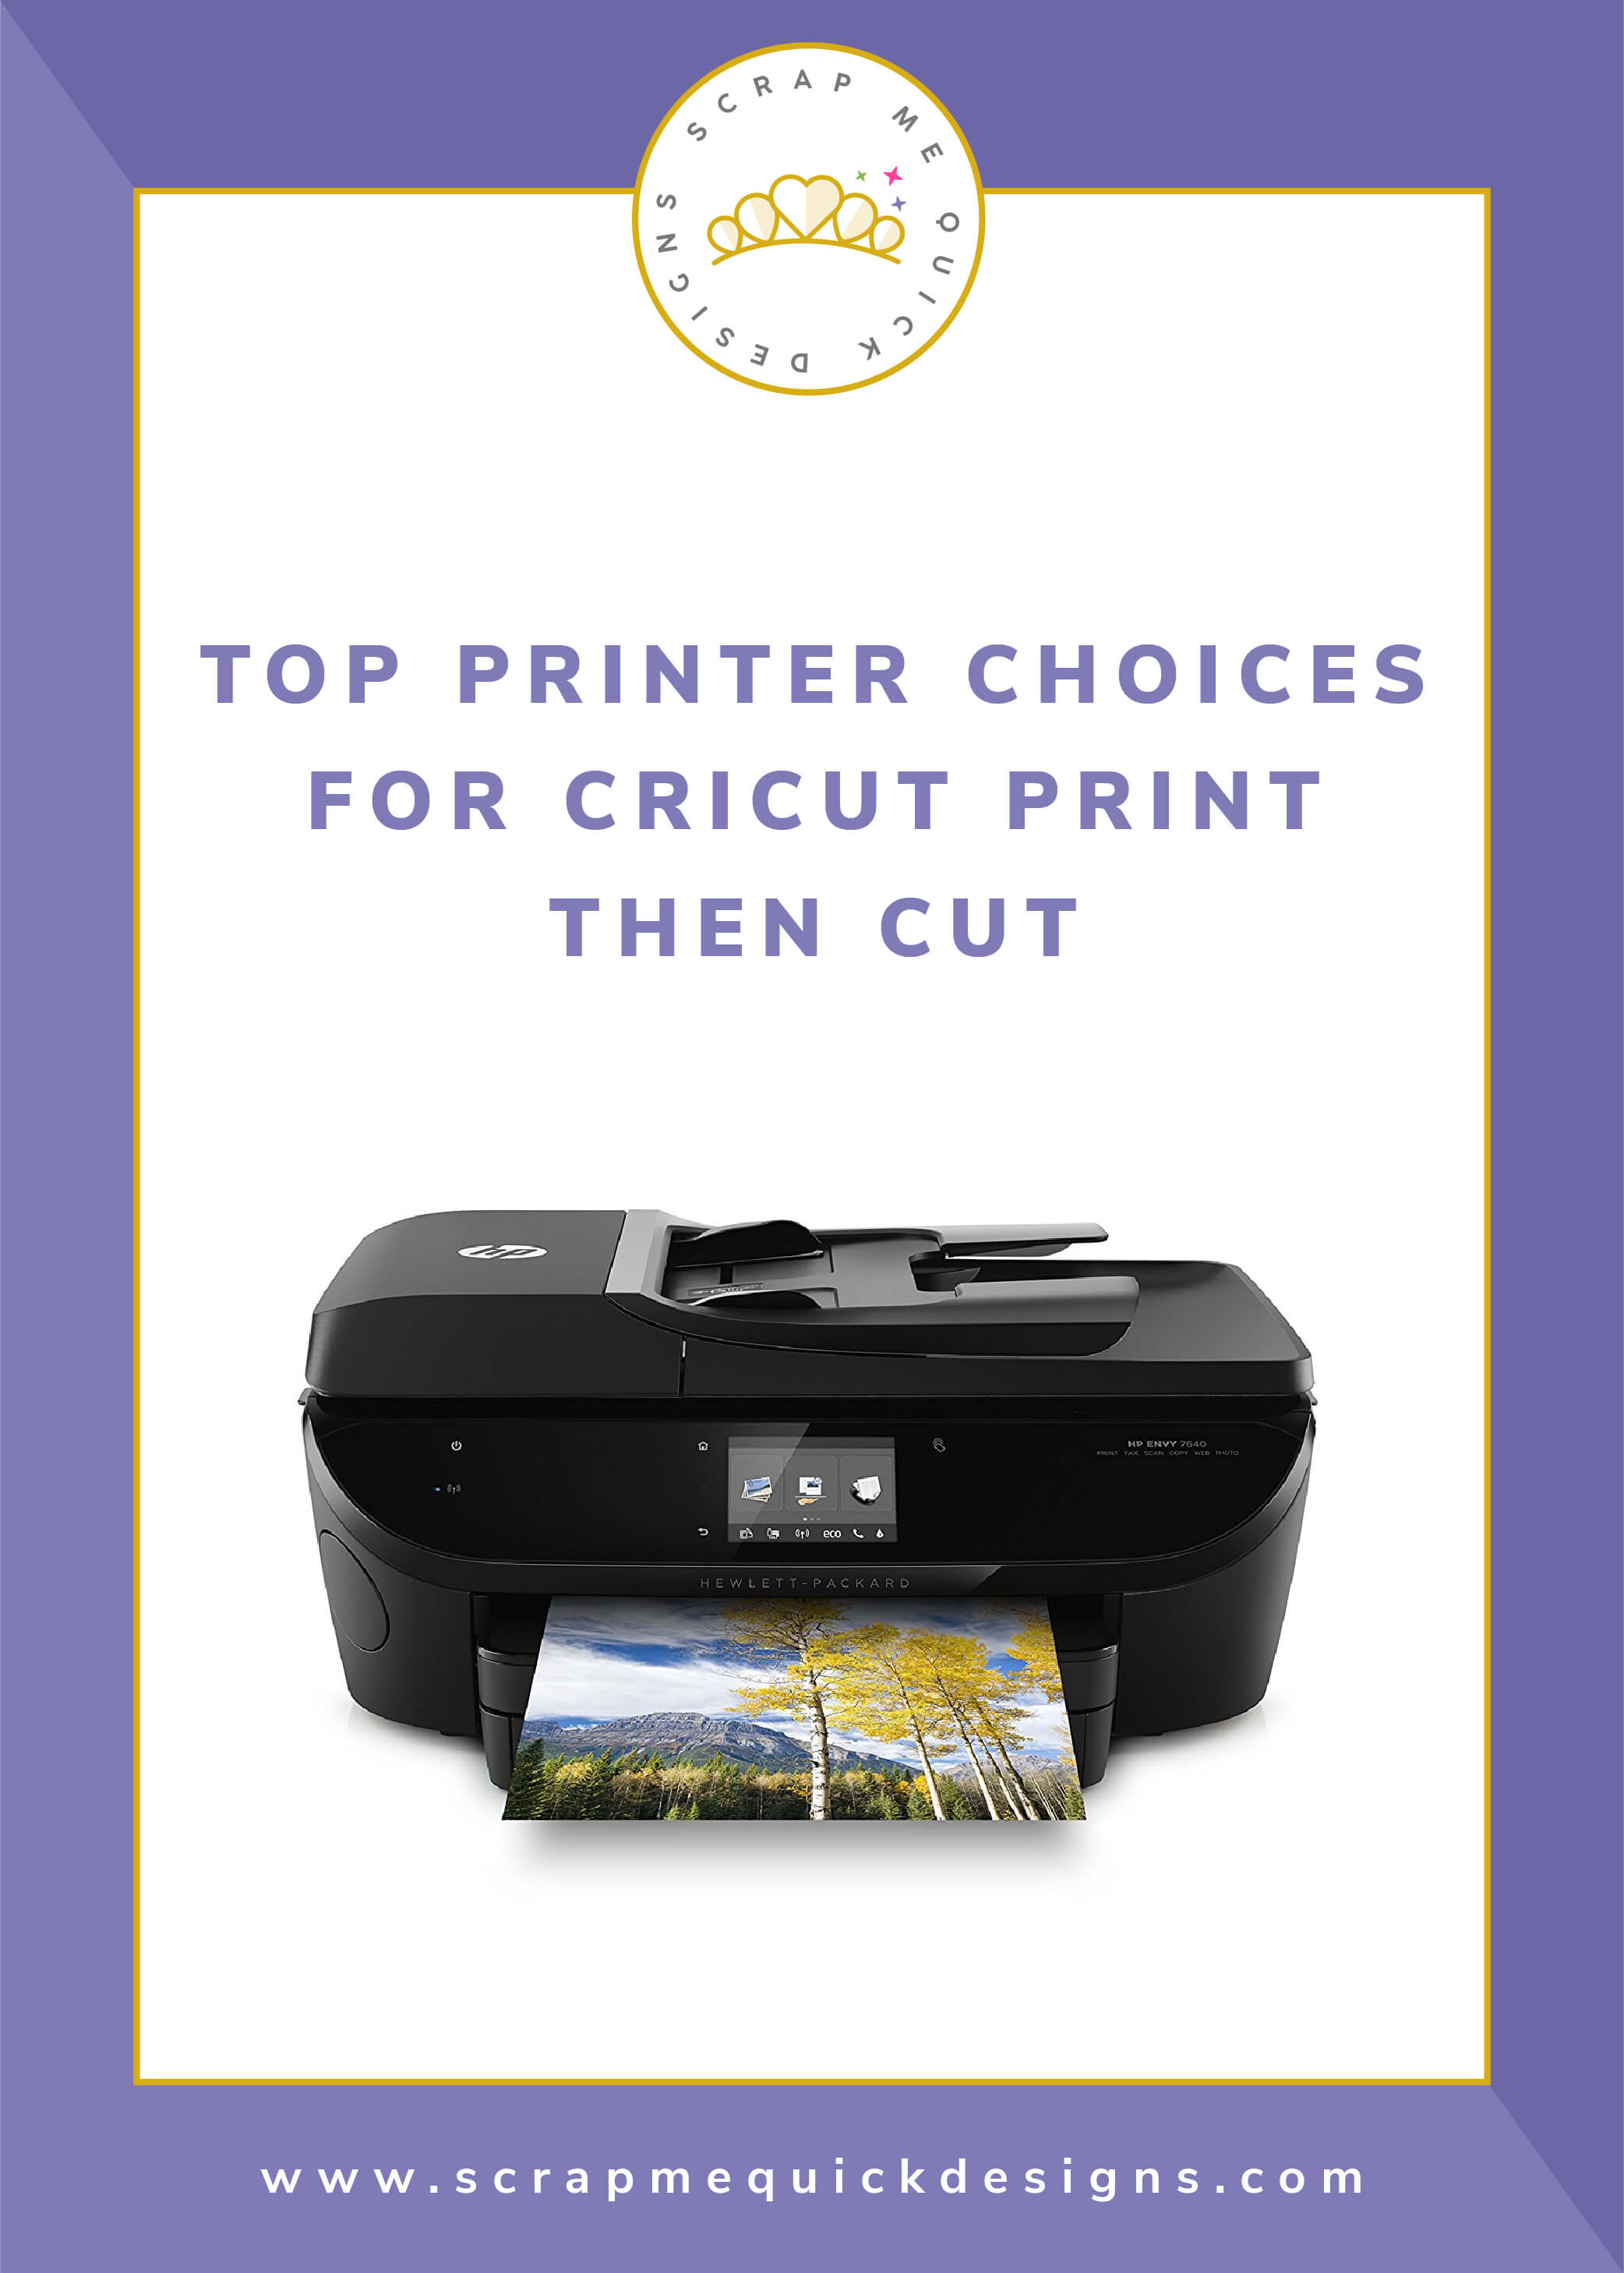 The Cricut Explore is a printer that cuts 